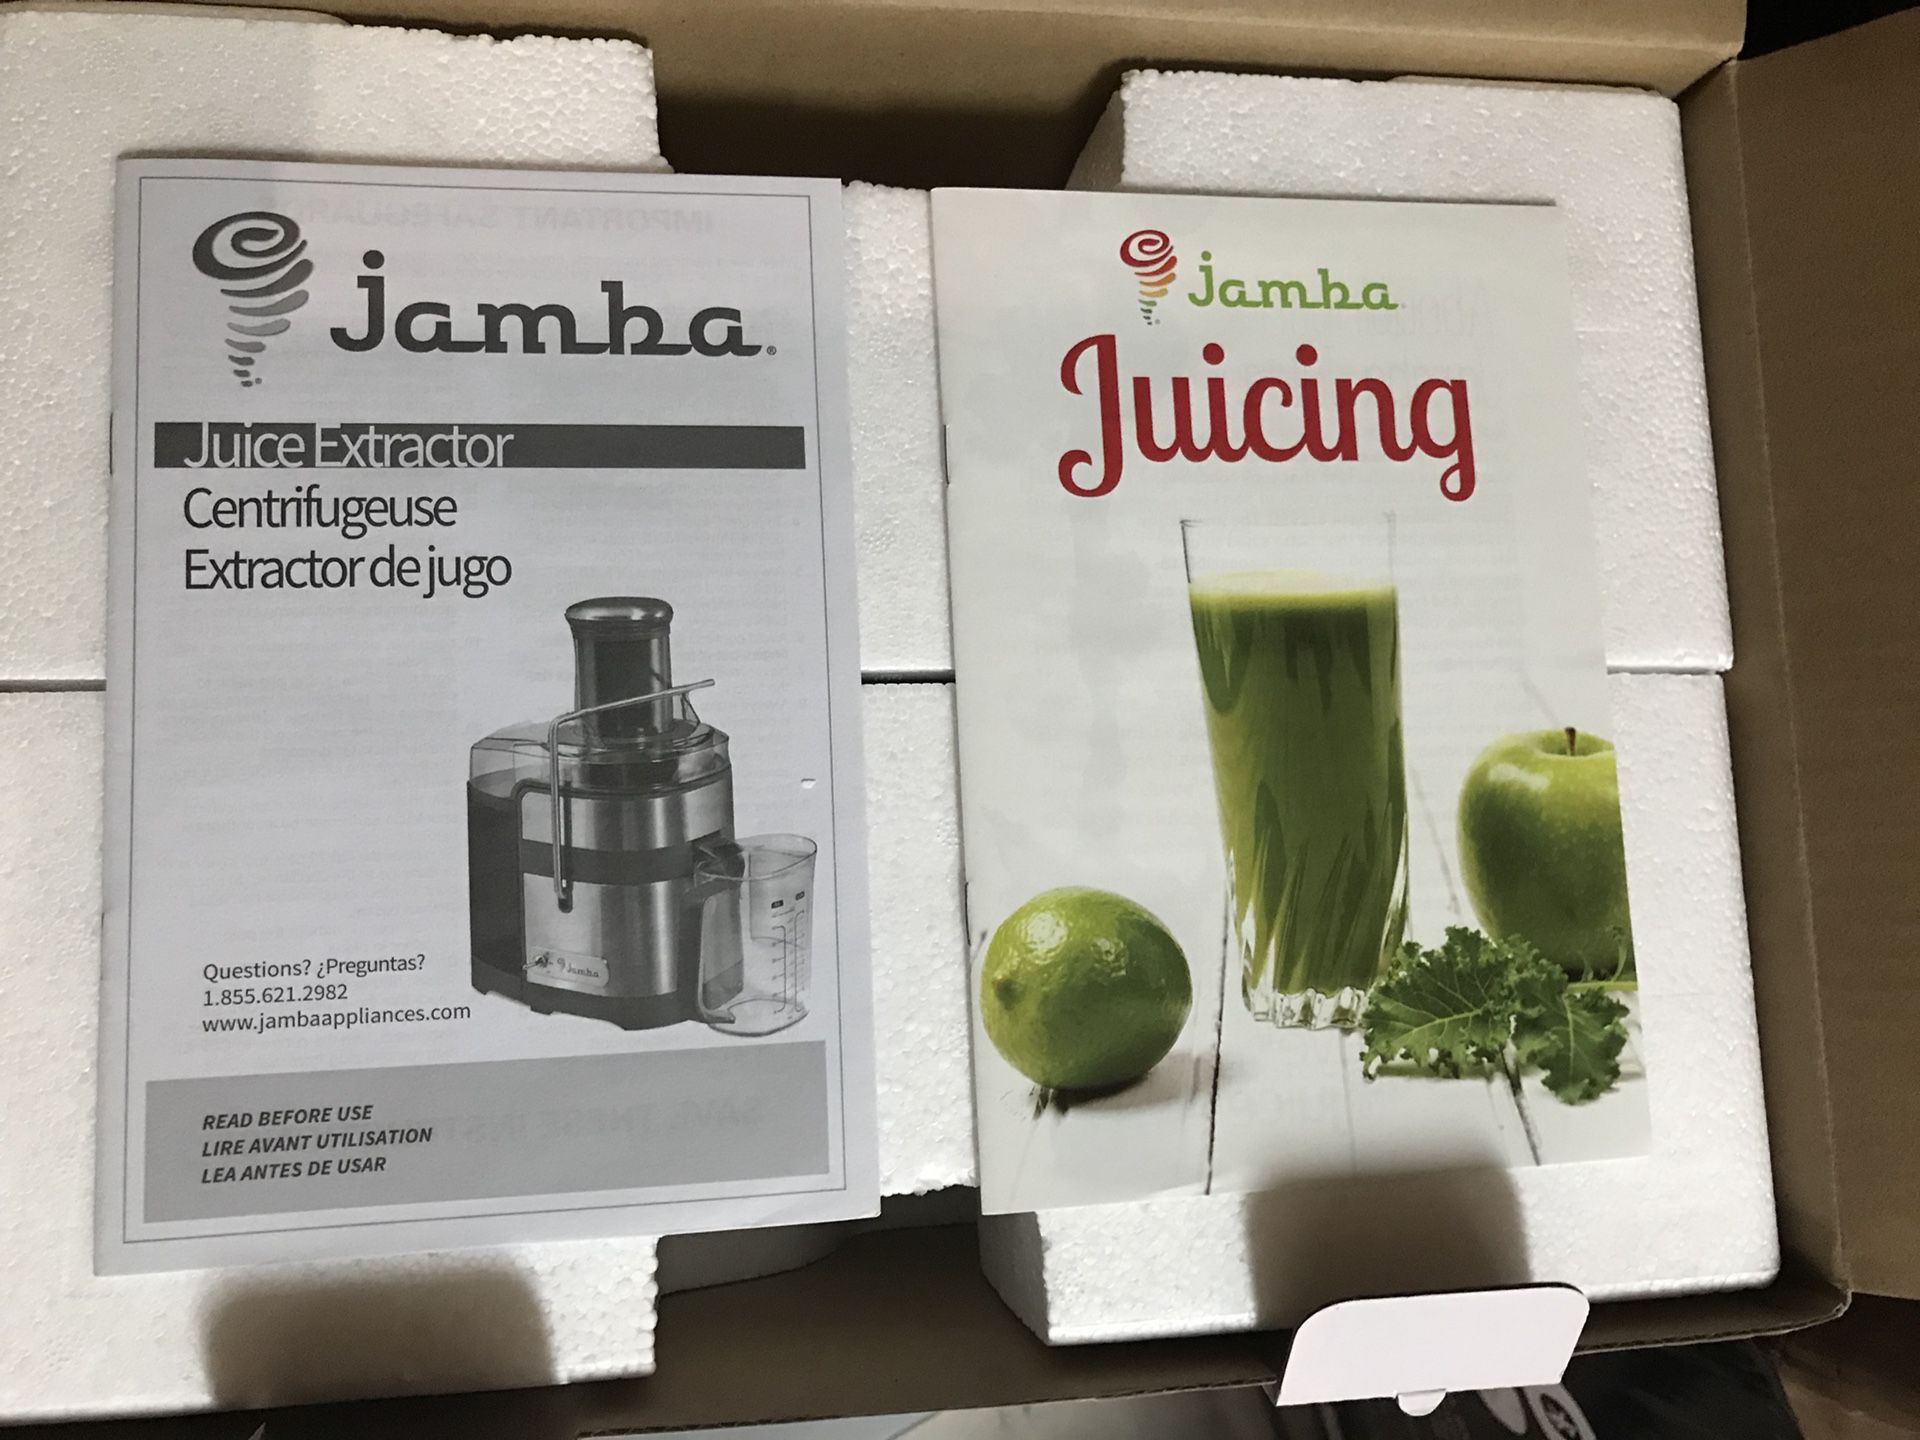 Jamba Juice extractor retail price - Curt's Premium Outlet